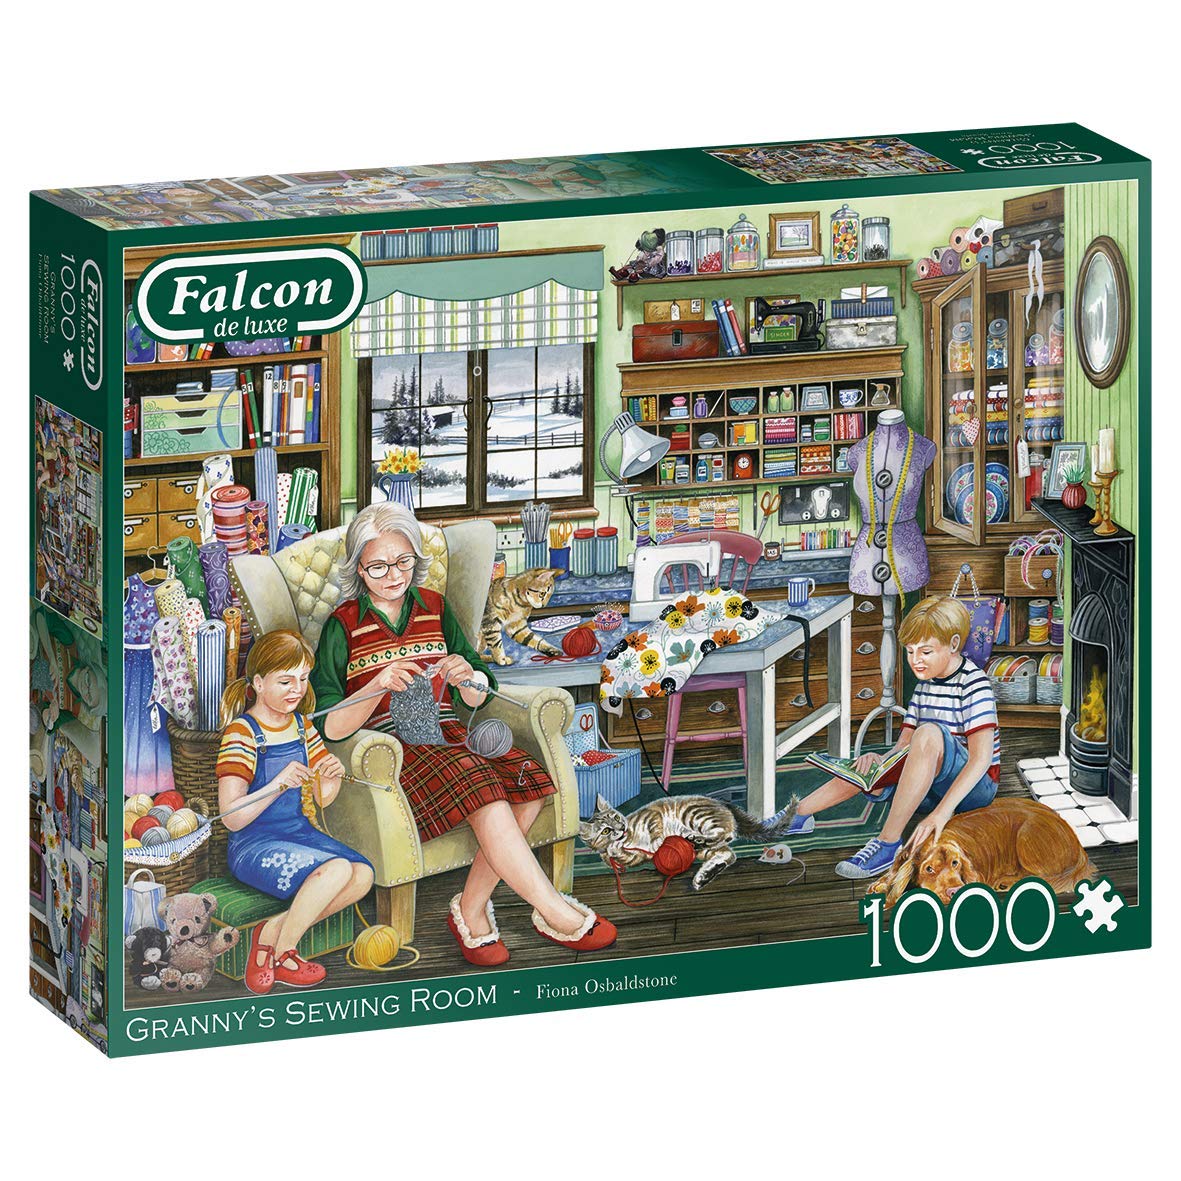 Falcon De Luxe - Granny's Sewing Room - 1000 Piece Jigsaw Puzzle